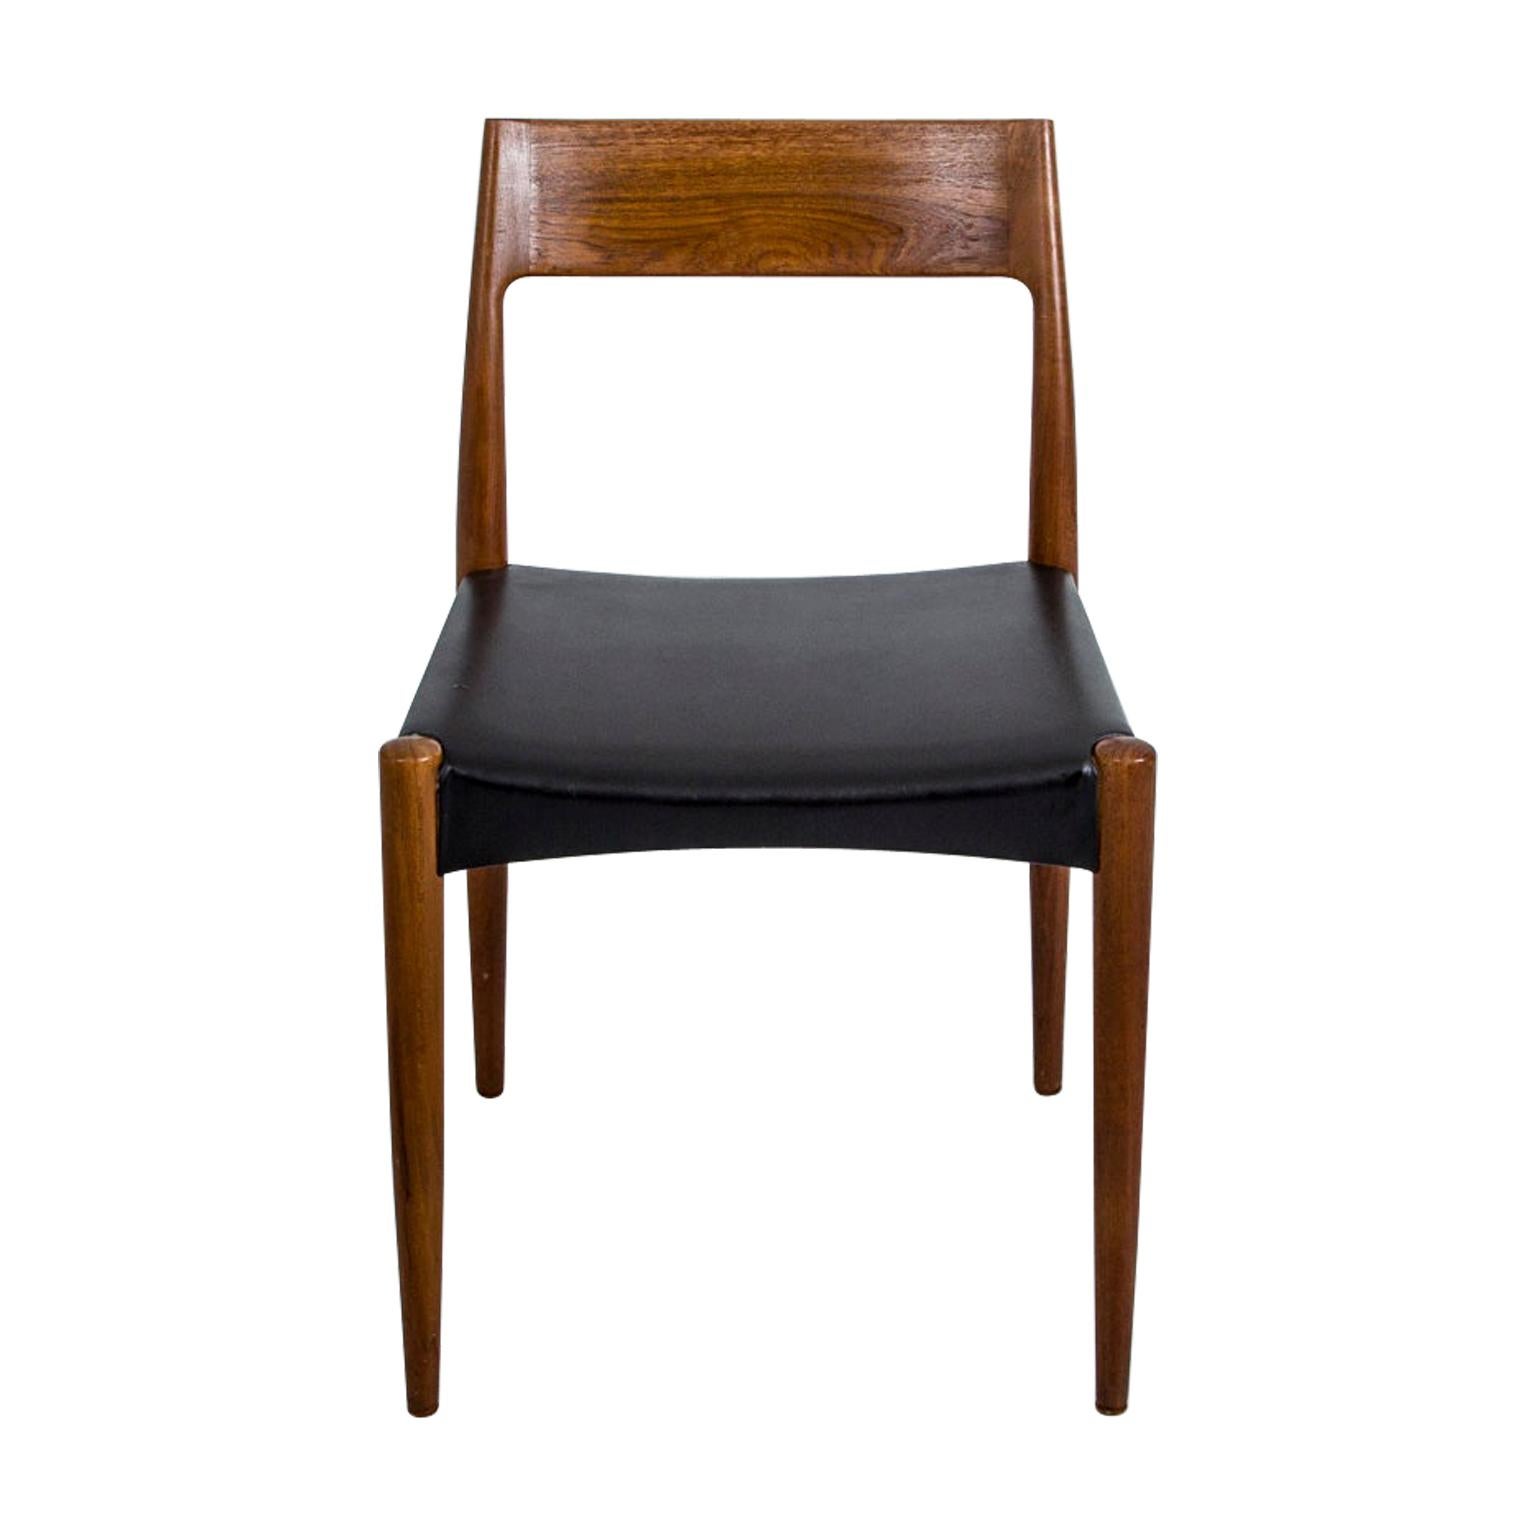 Teak Chair No. 77 by Niels Moller for Moller Models Denmark, 1960s For Sale